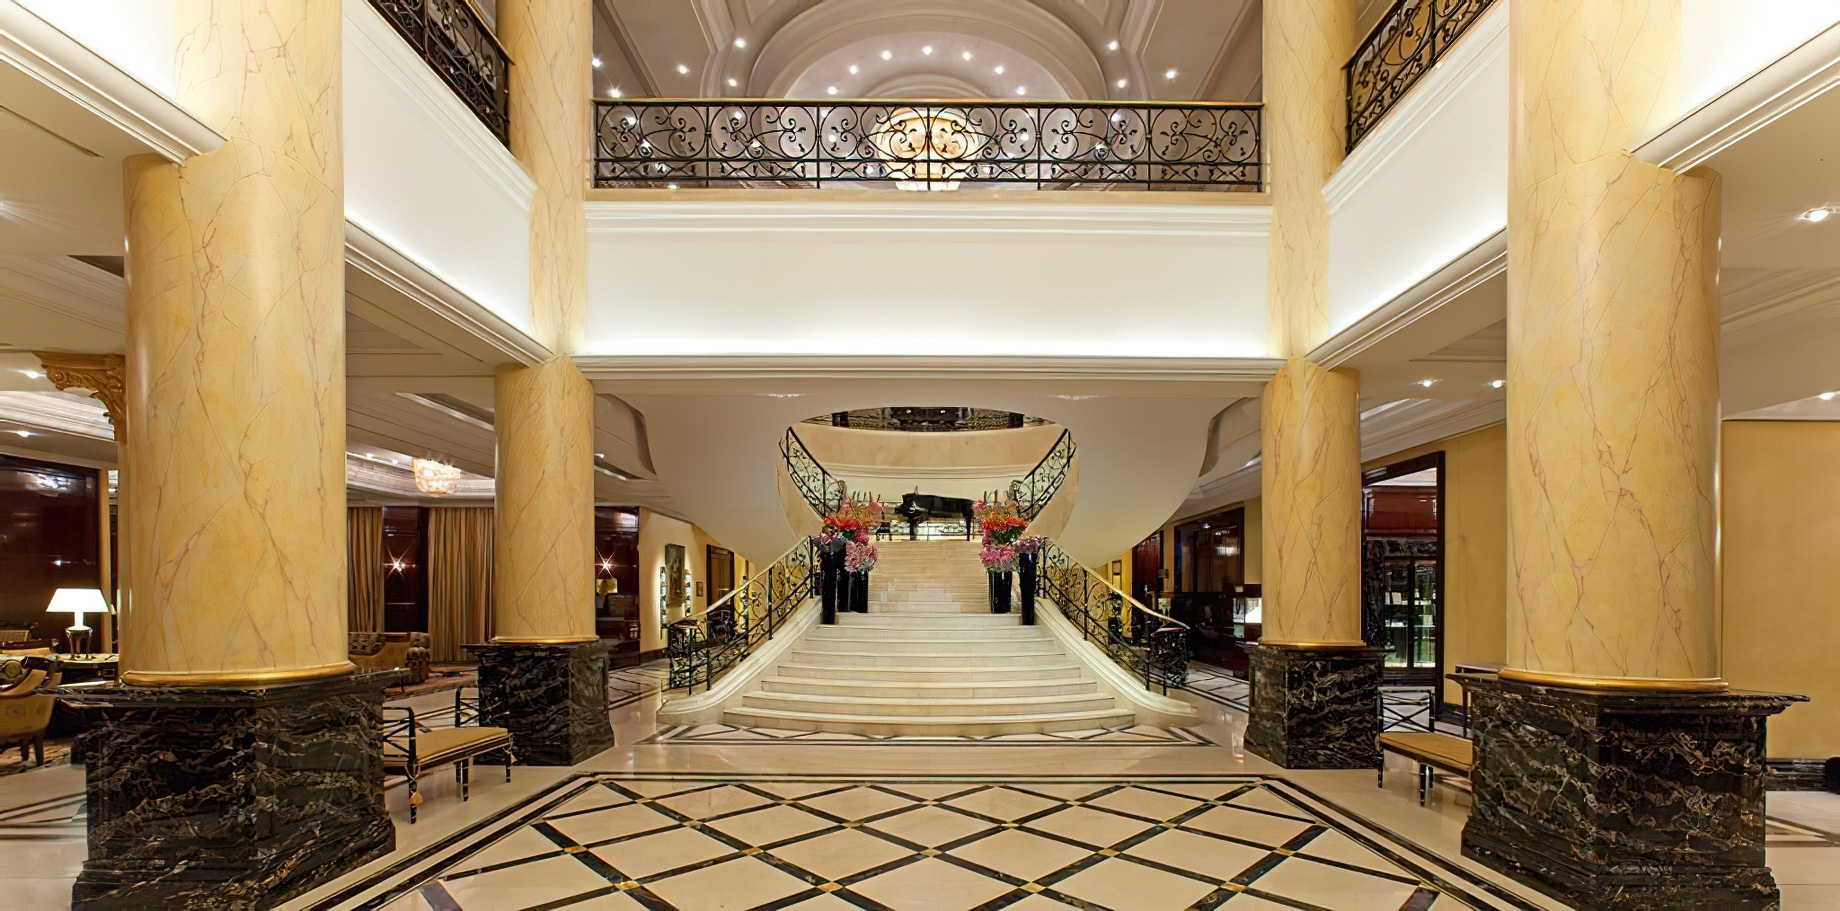 The Ritz-Carlton, Berlin Hotel - Berlin, Germany - Lobby